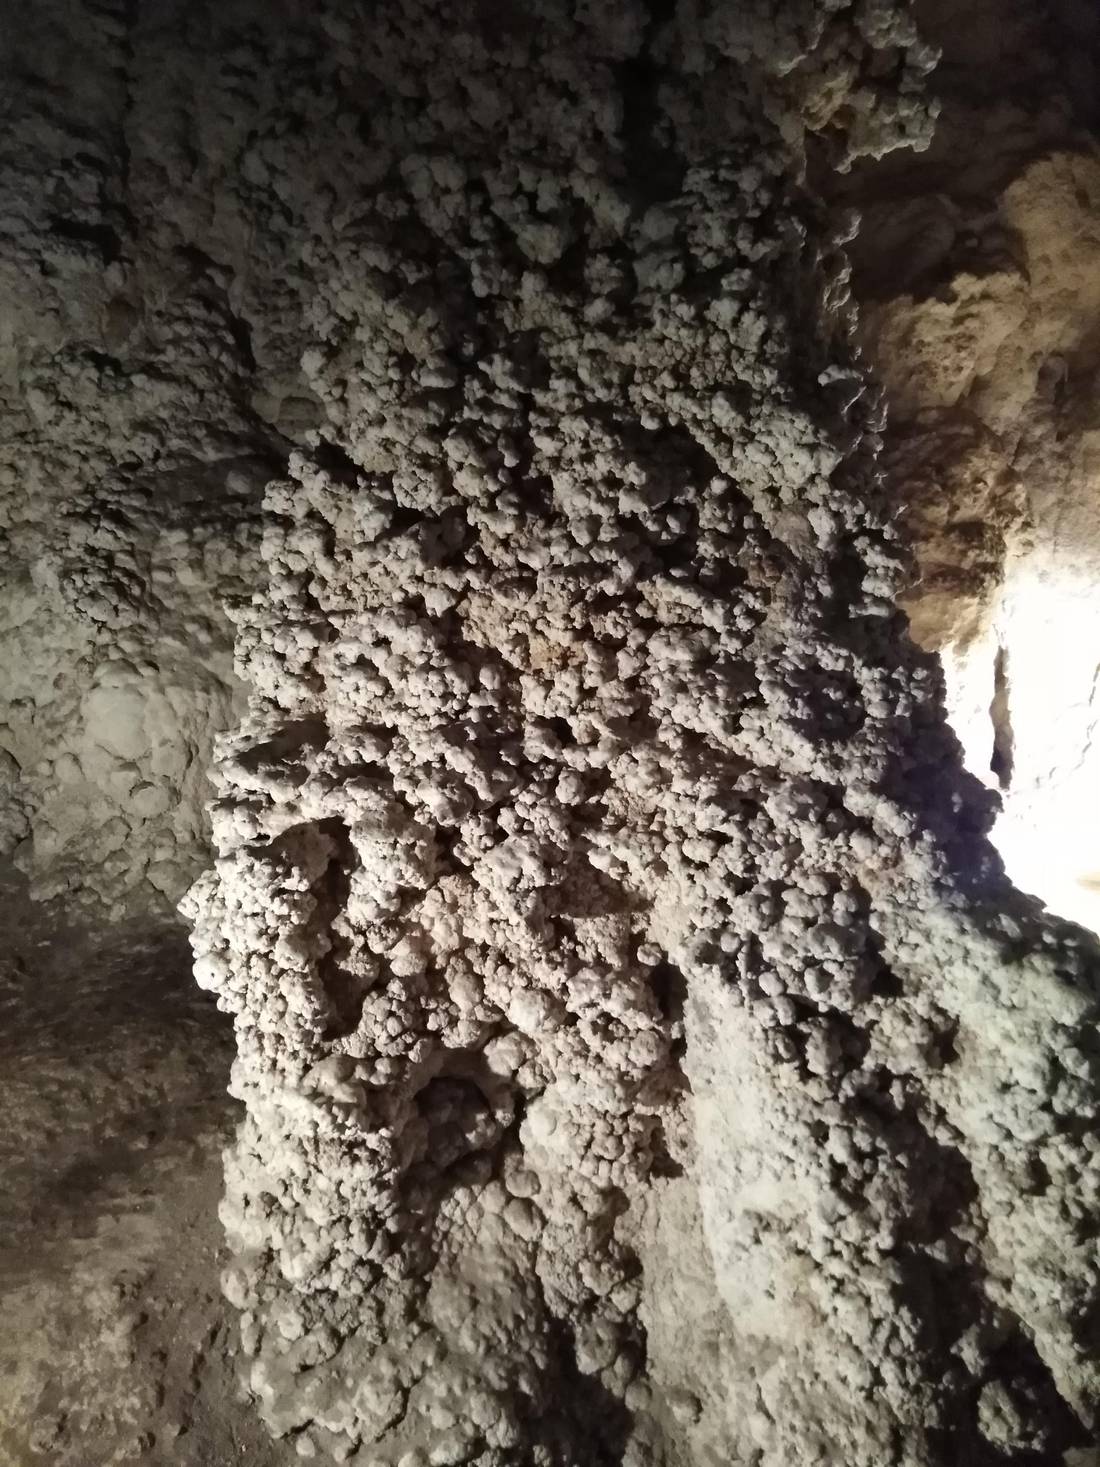 Popcorn stalactites